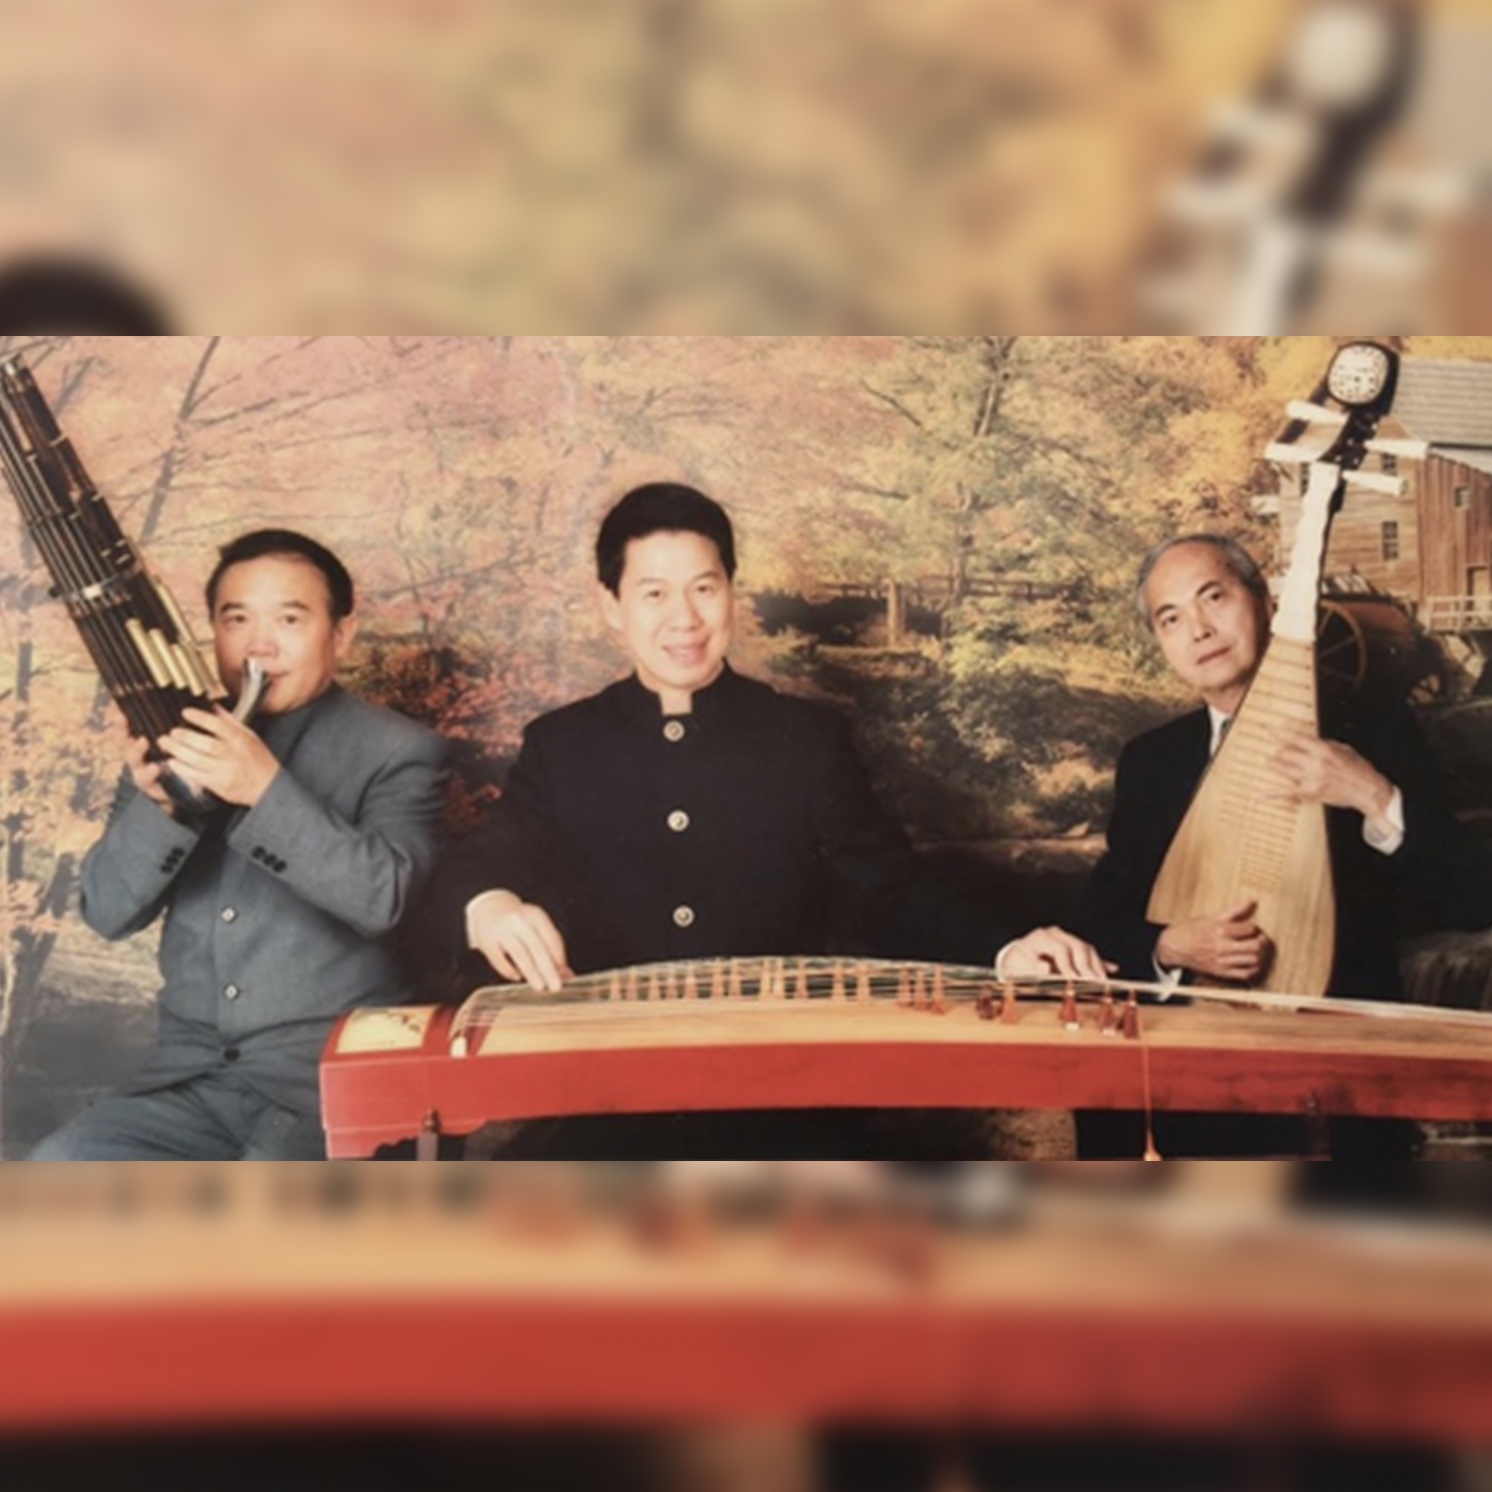 Asian men playing instruments